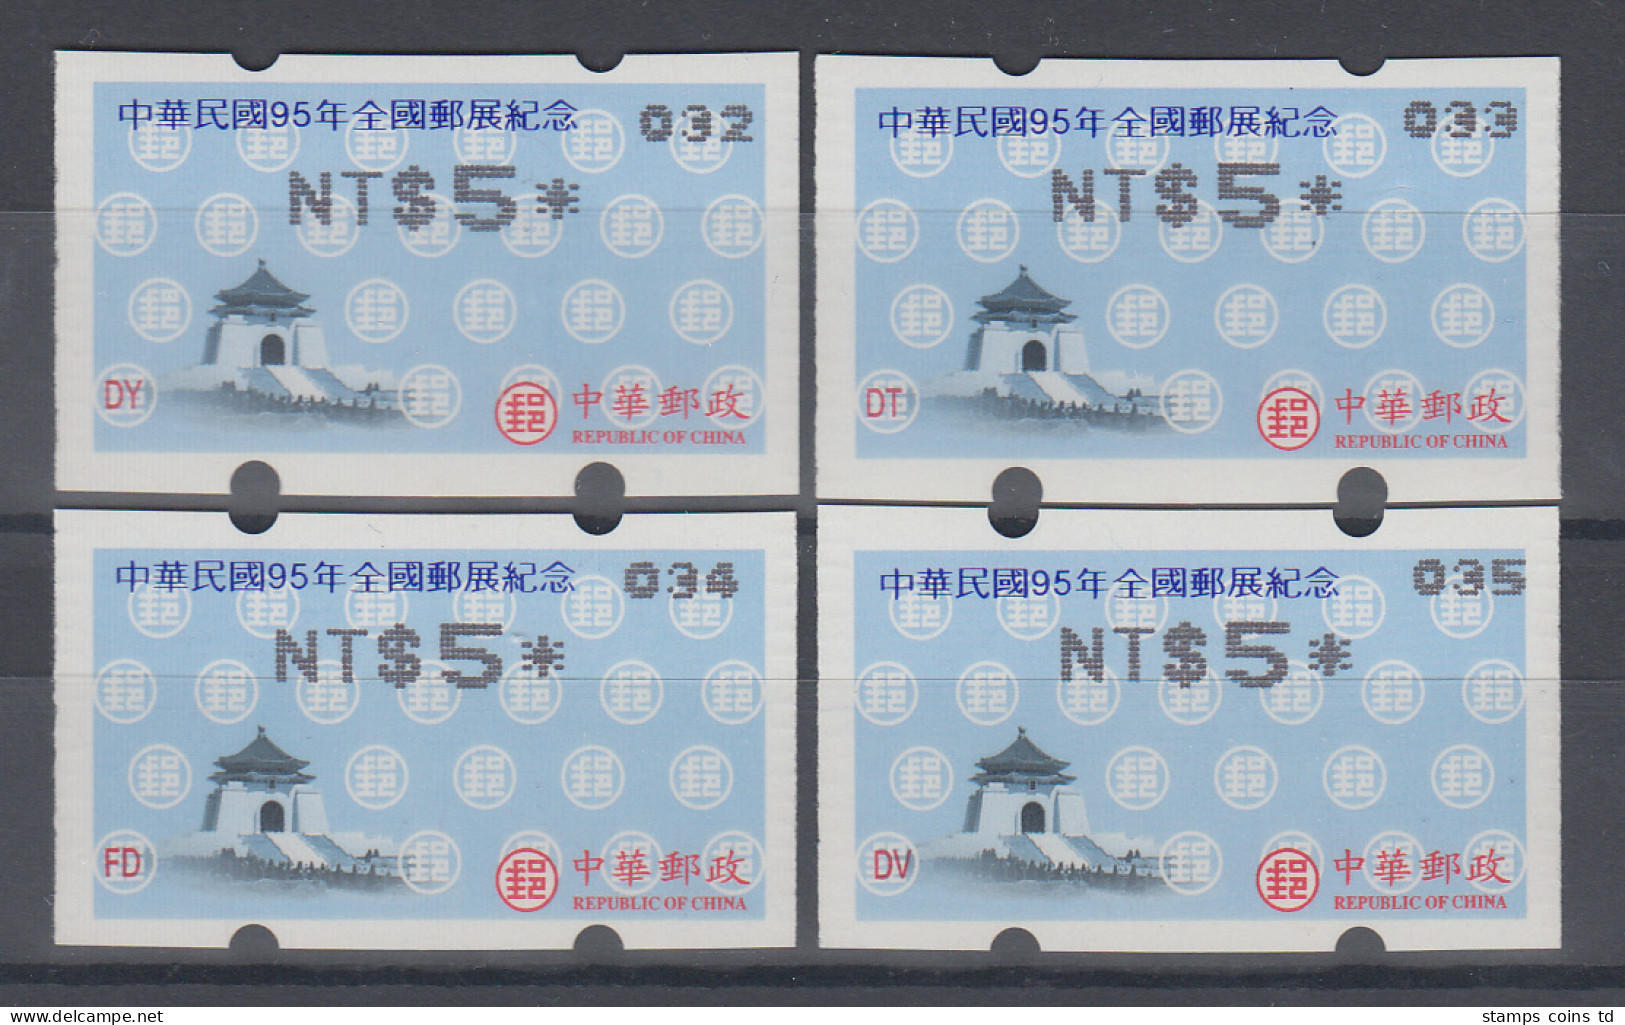 China Taiwan Nagler- Sonder-ATM ROCUPEX 2006  Mi.-Nr. 13.3e  032,033,034,035 ** - Distributors